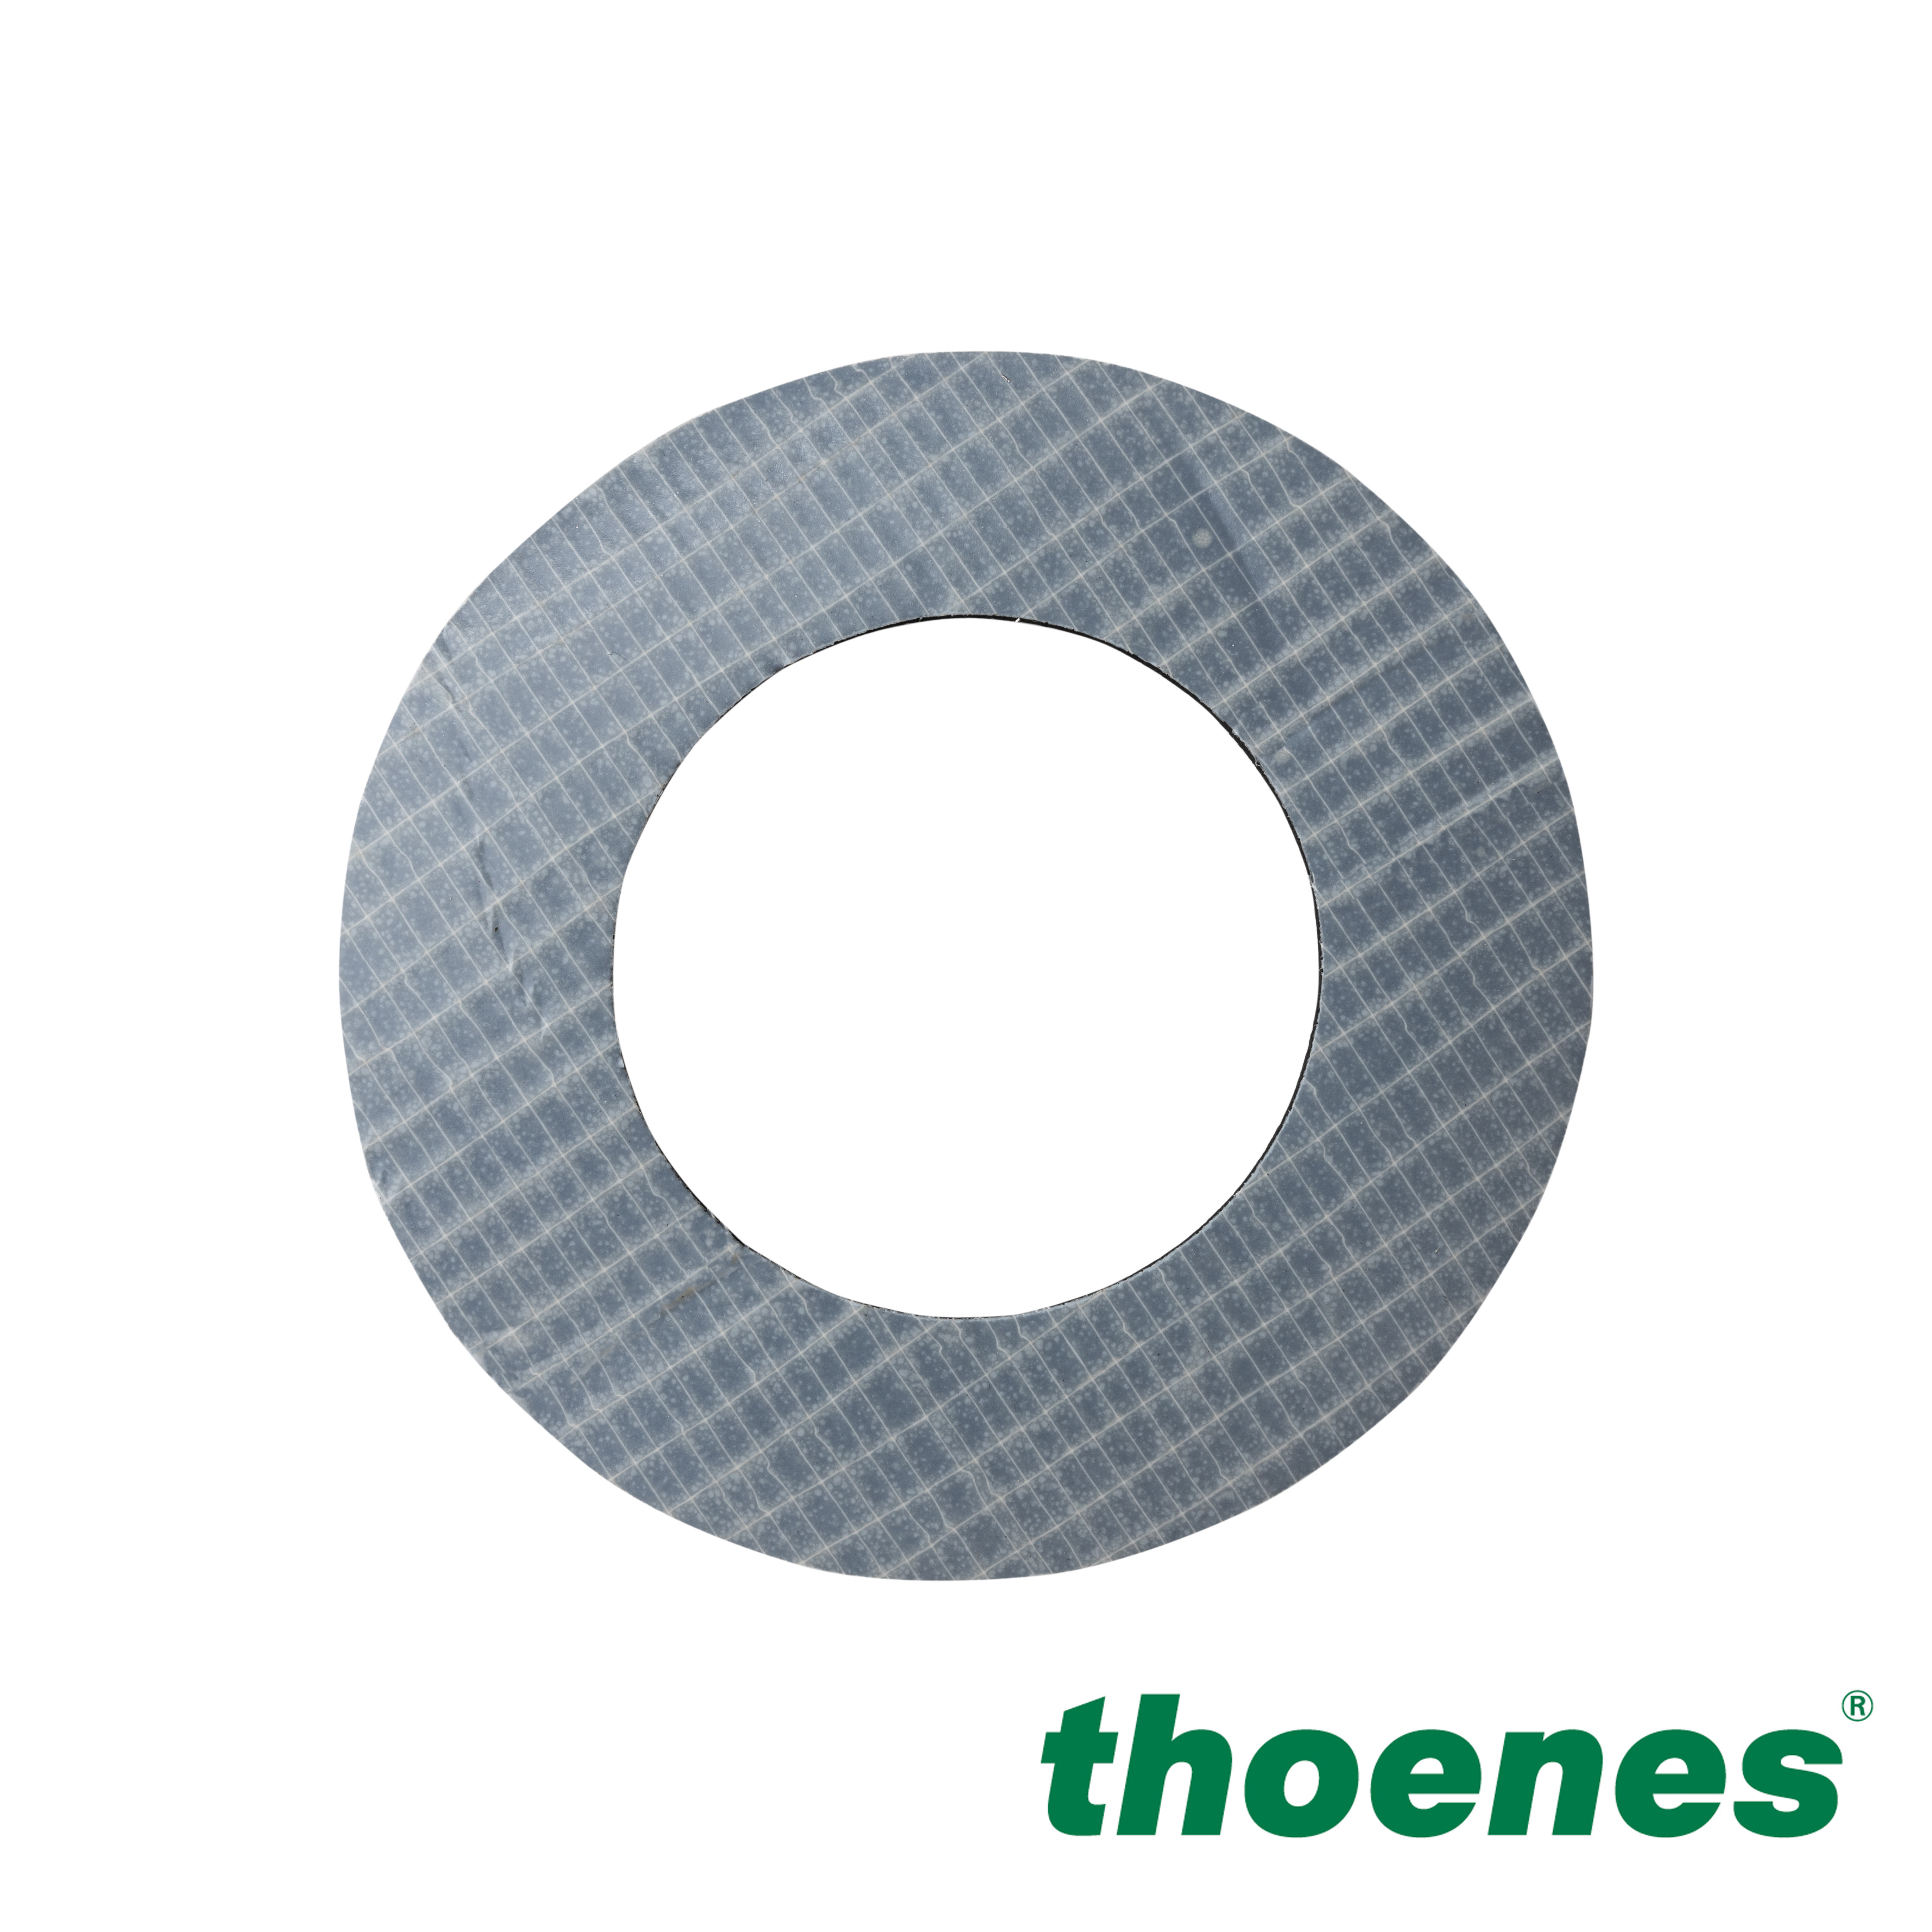 thoenes® cellular rubber (strip)